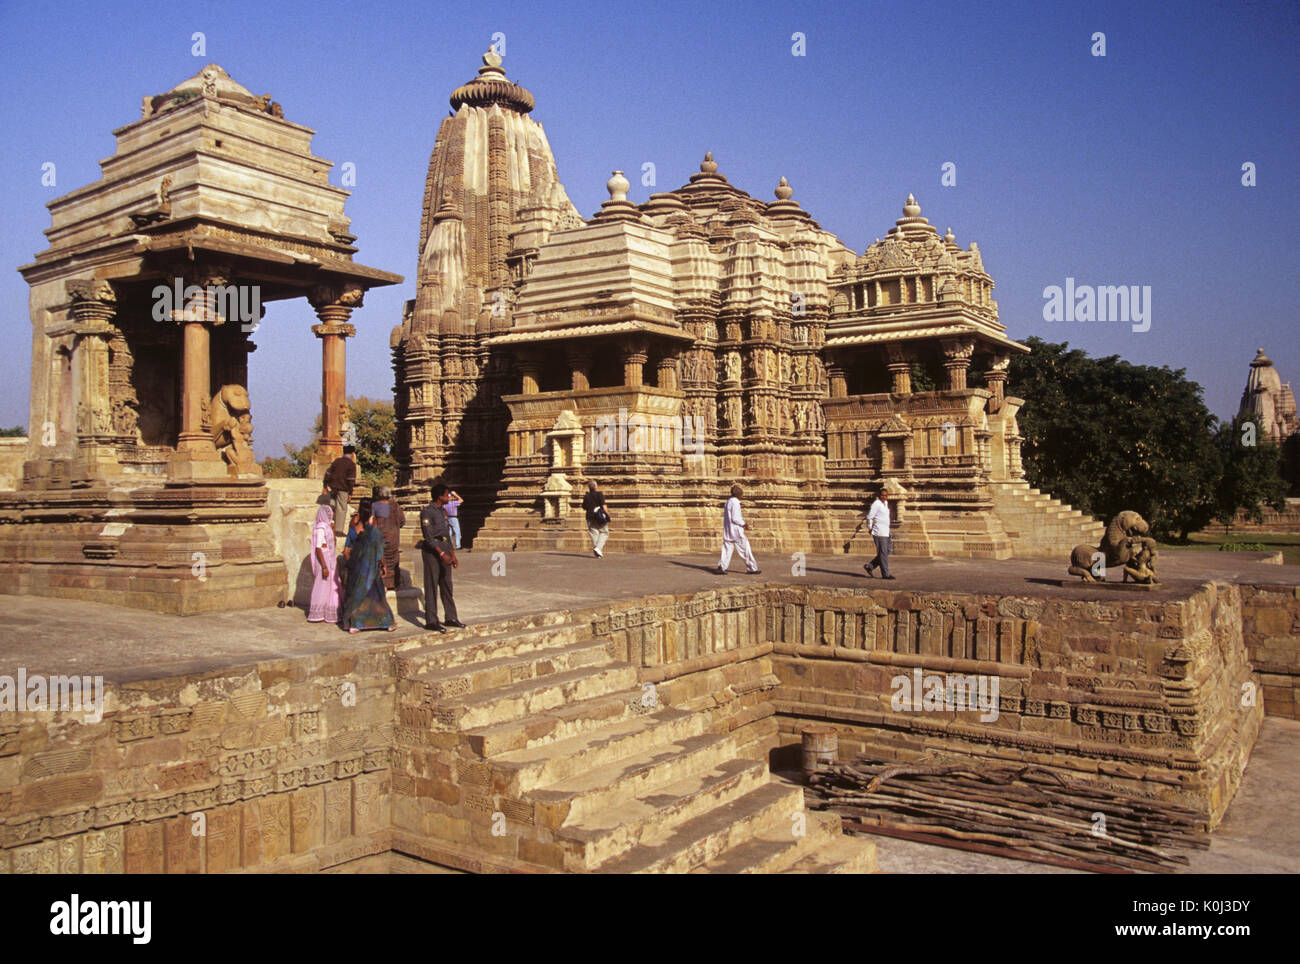 Mahadeva, Devi Jagadamba, and Chitragupta Temples in Western Group, Khajuraho Group of Monuments, Madhya Pradesh, India Stock Photo